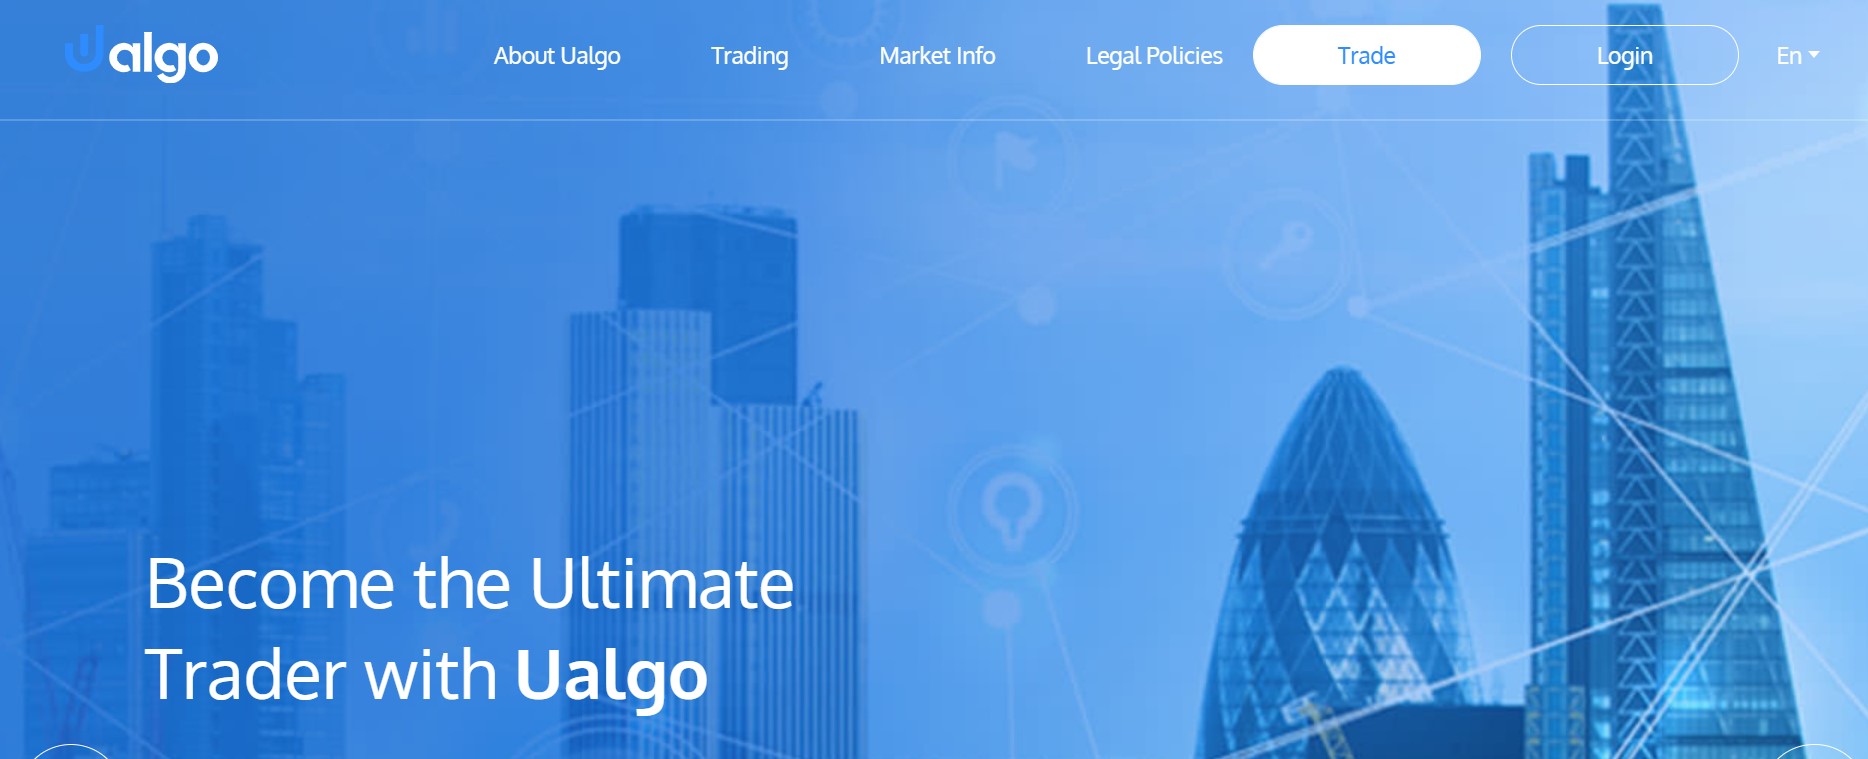 Ualgo website